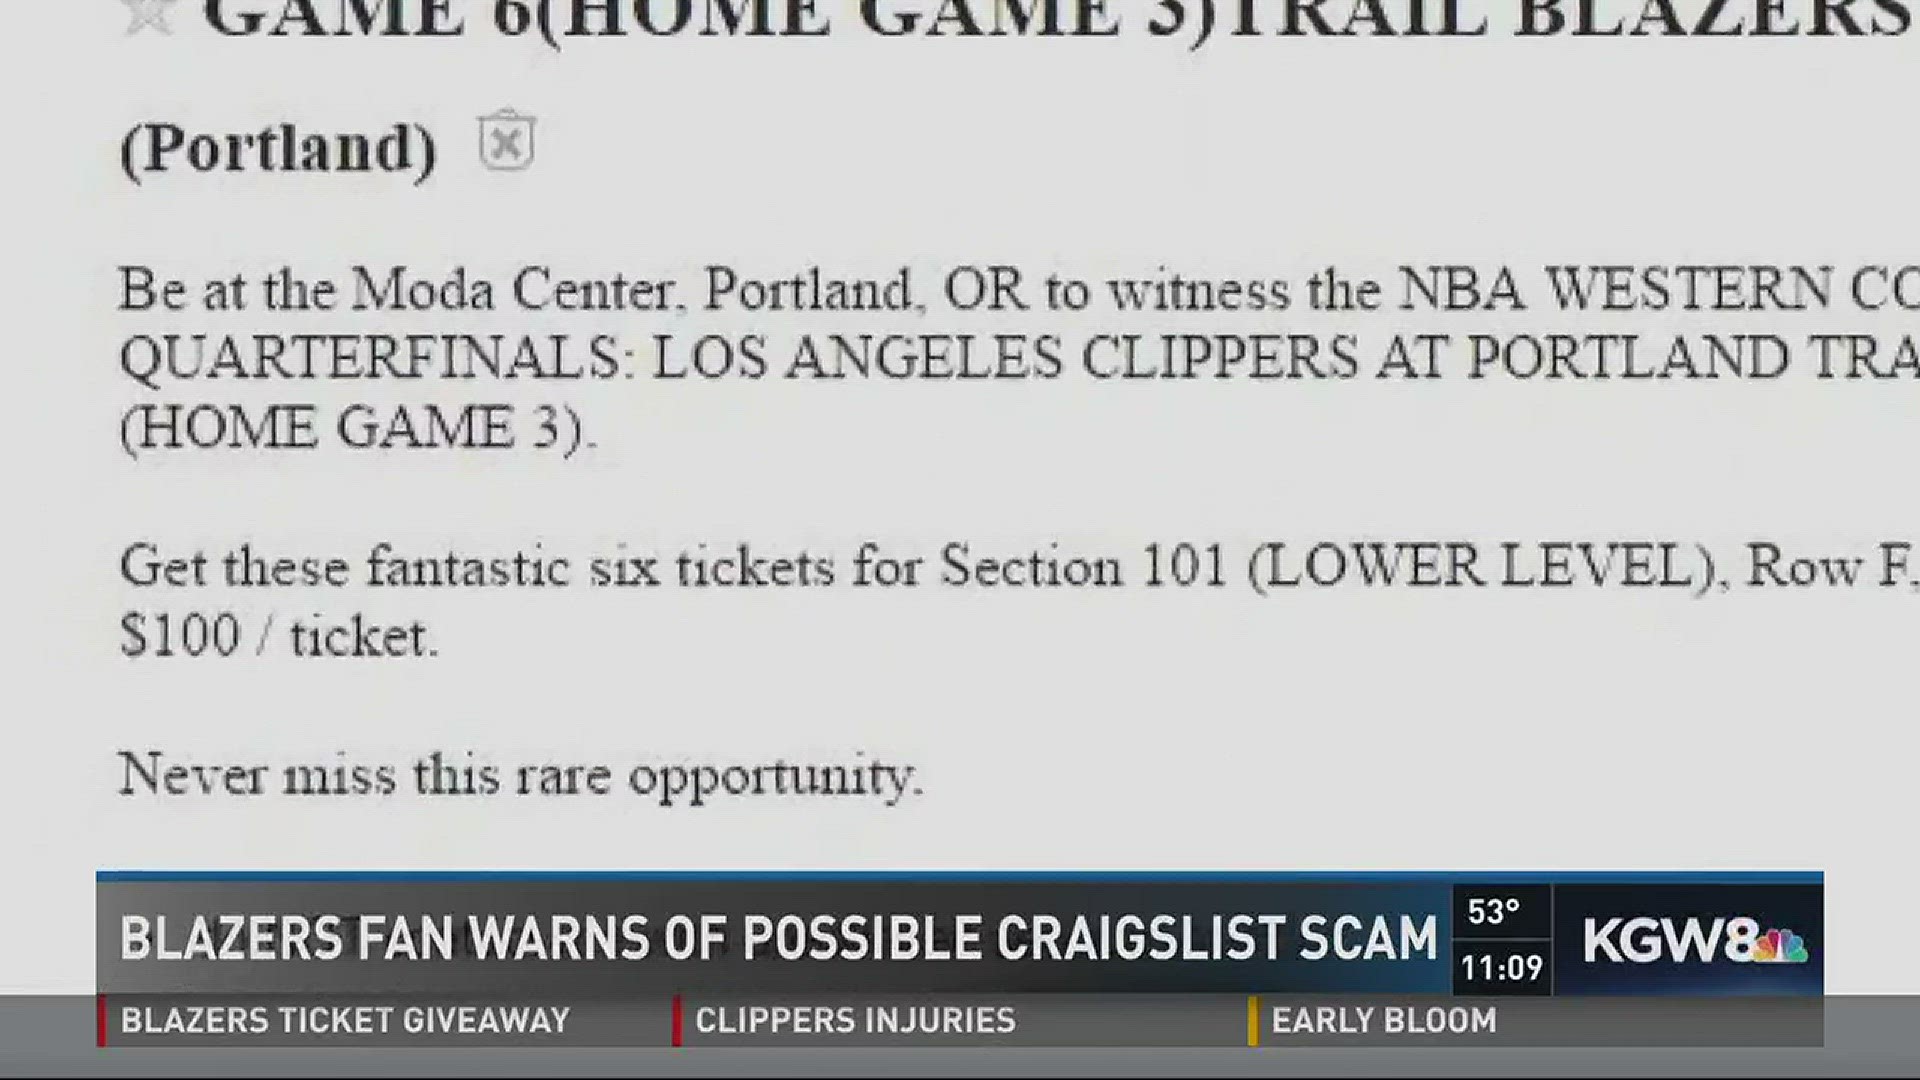 Blazers fan warns of possible craigslist scam